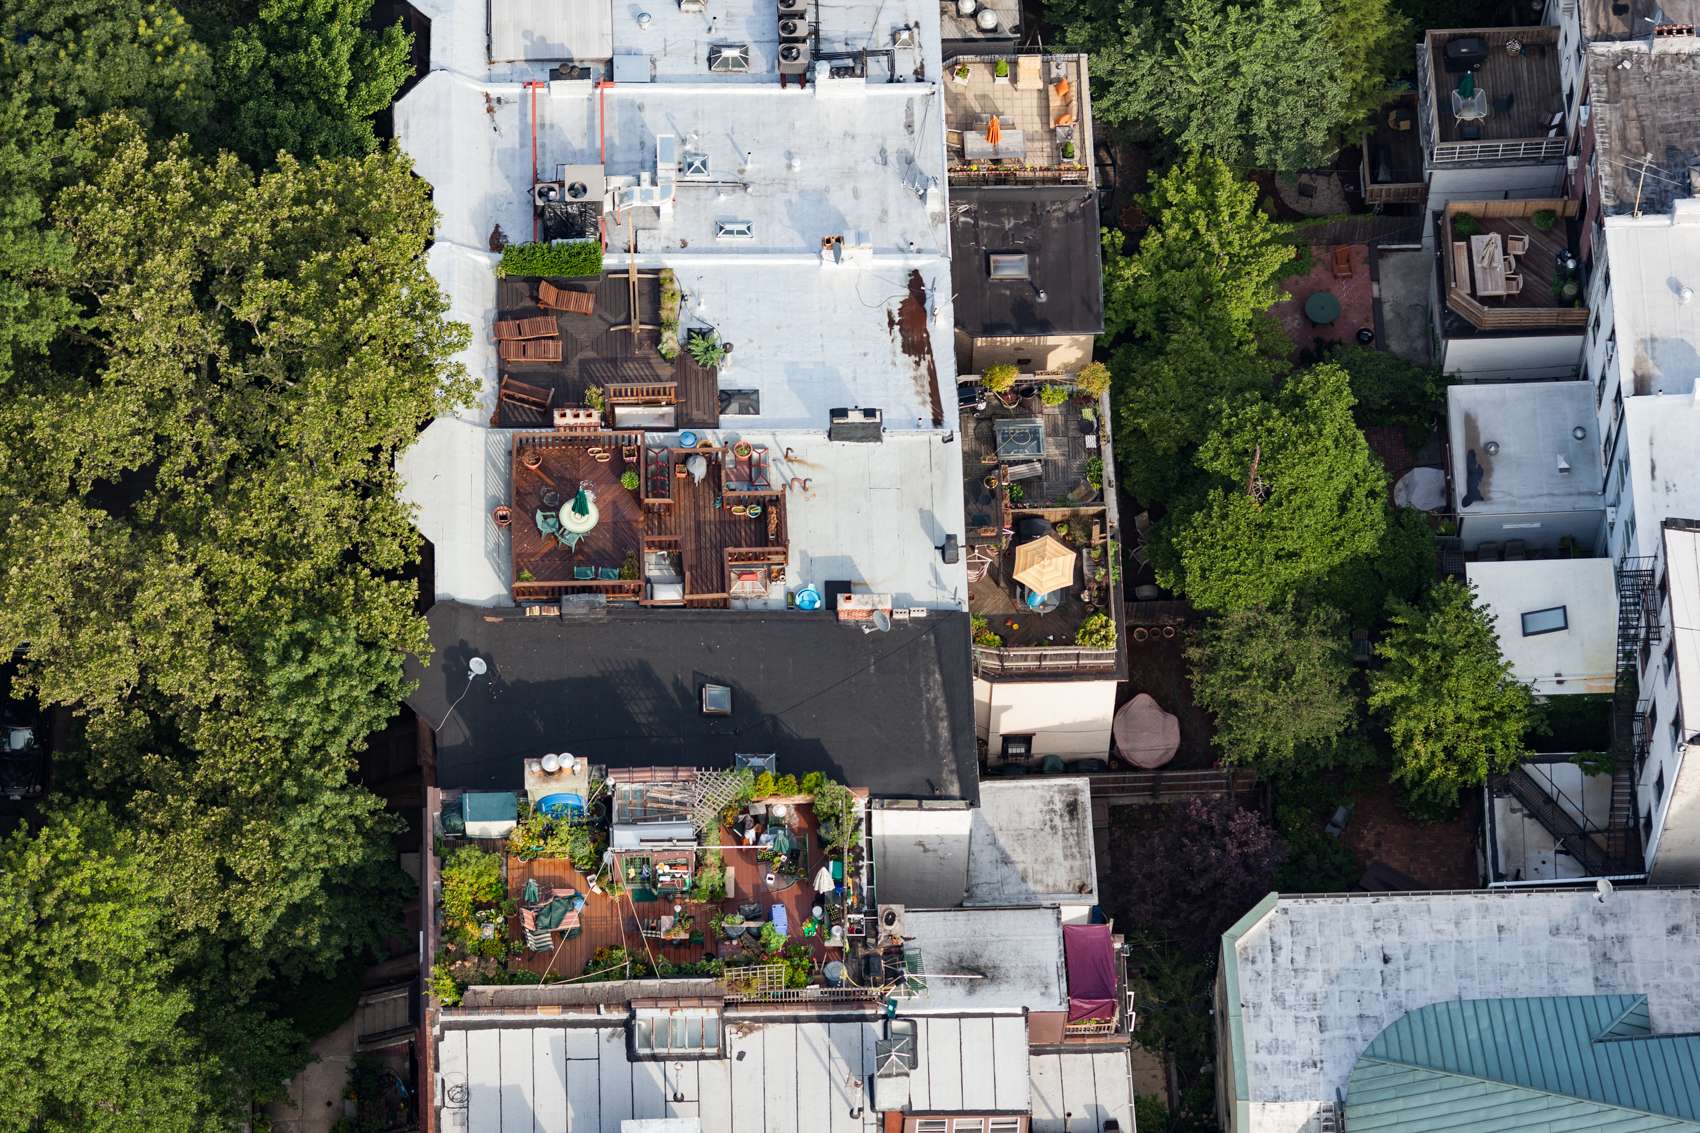 551 3rd St, Park Slope, Brooklyn, NY, 11215, 40.669628,-73.976714, Brooklyn: Small decks still provide fresh air and sun to city-dwellers.